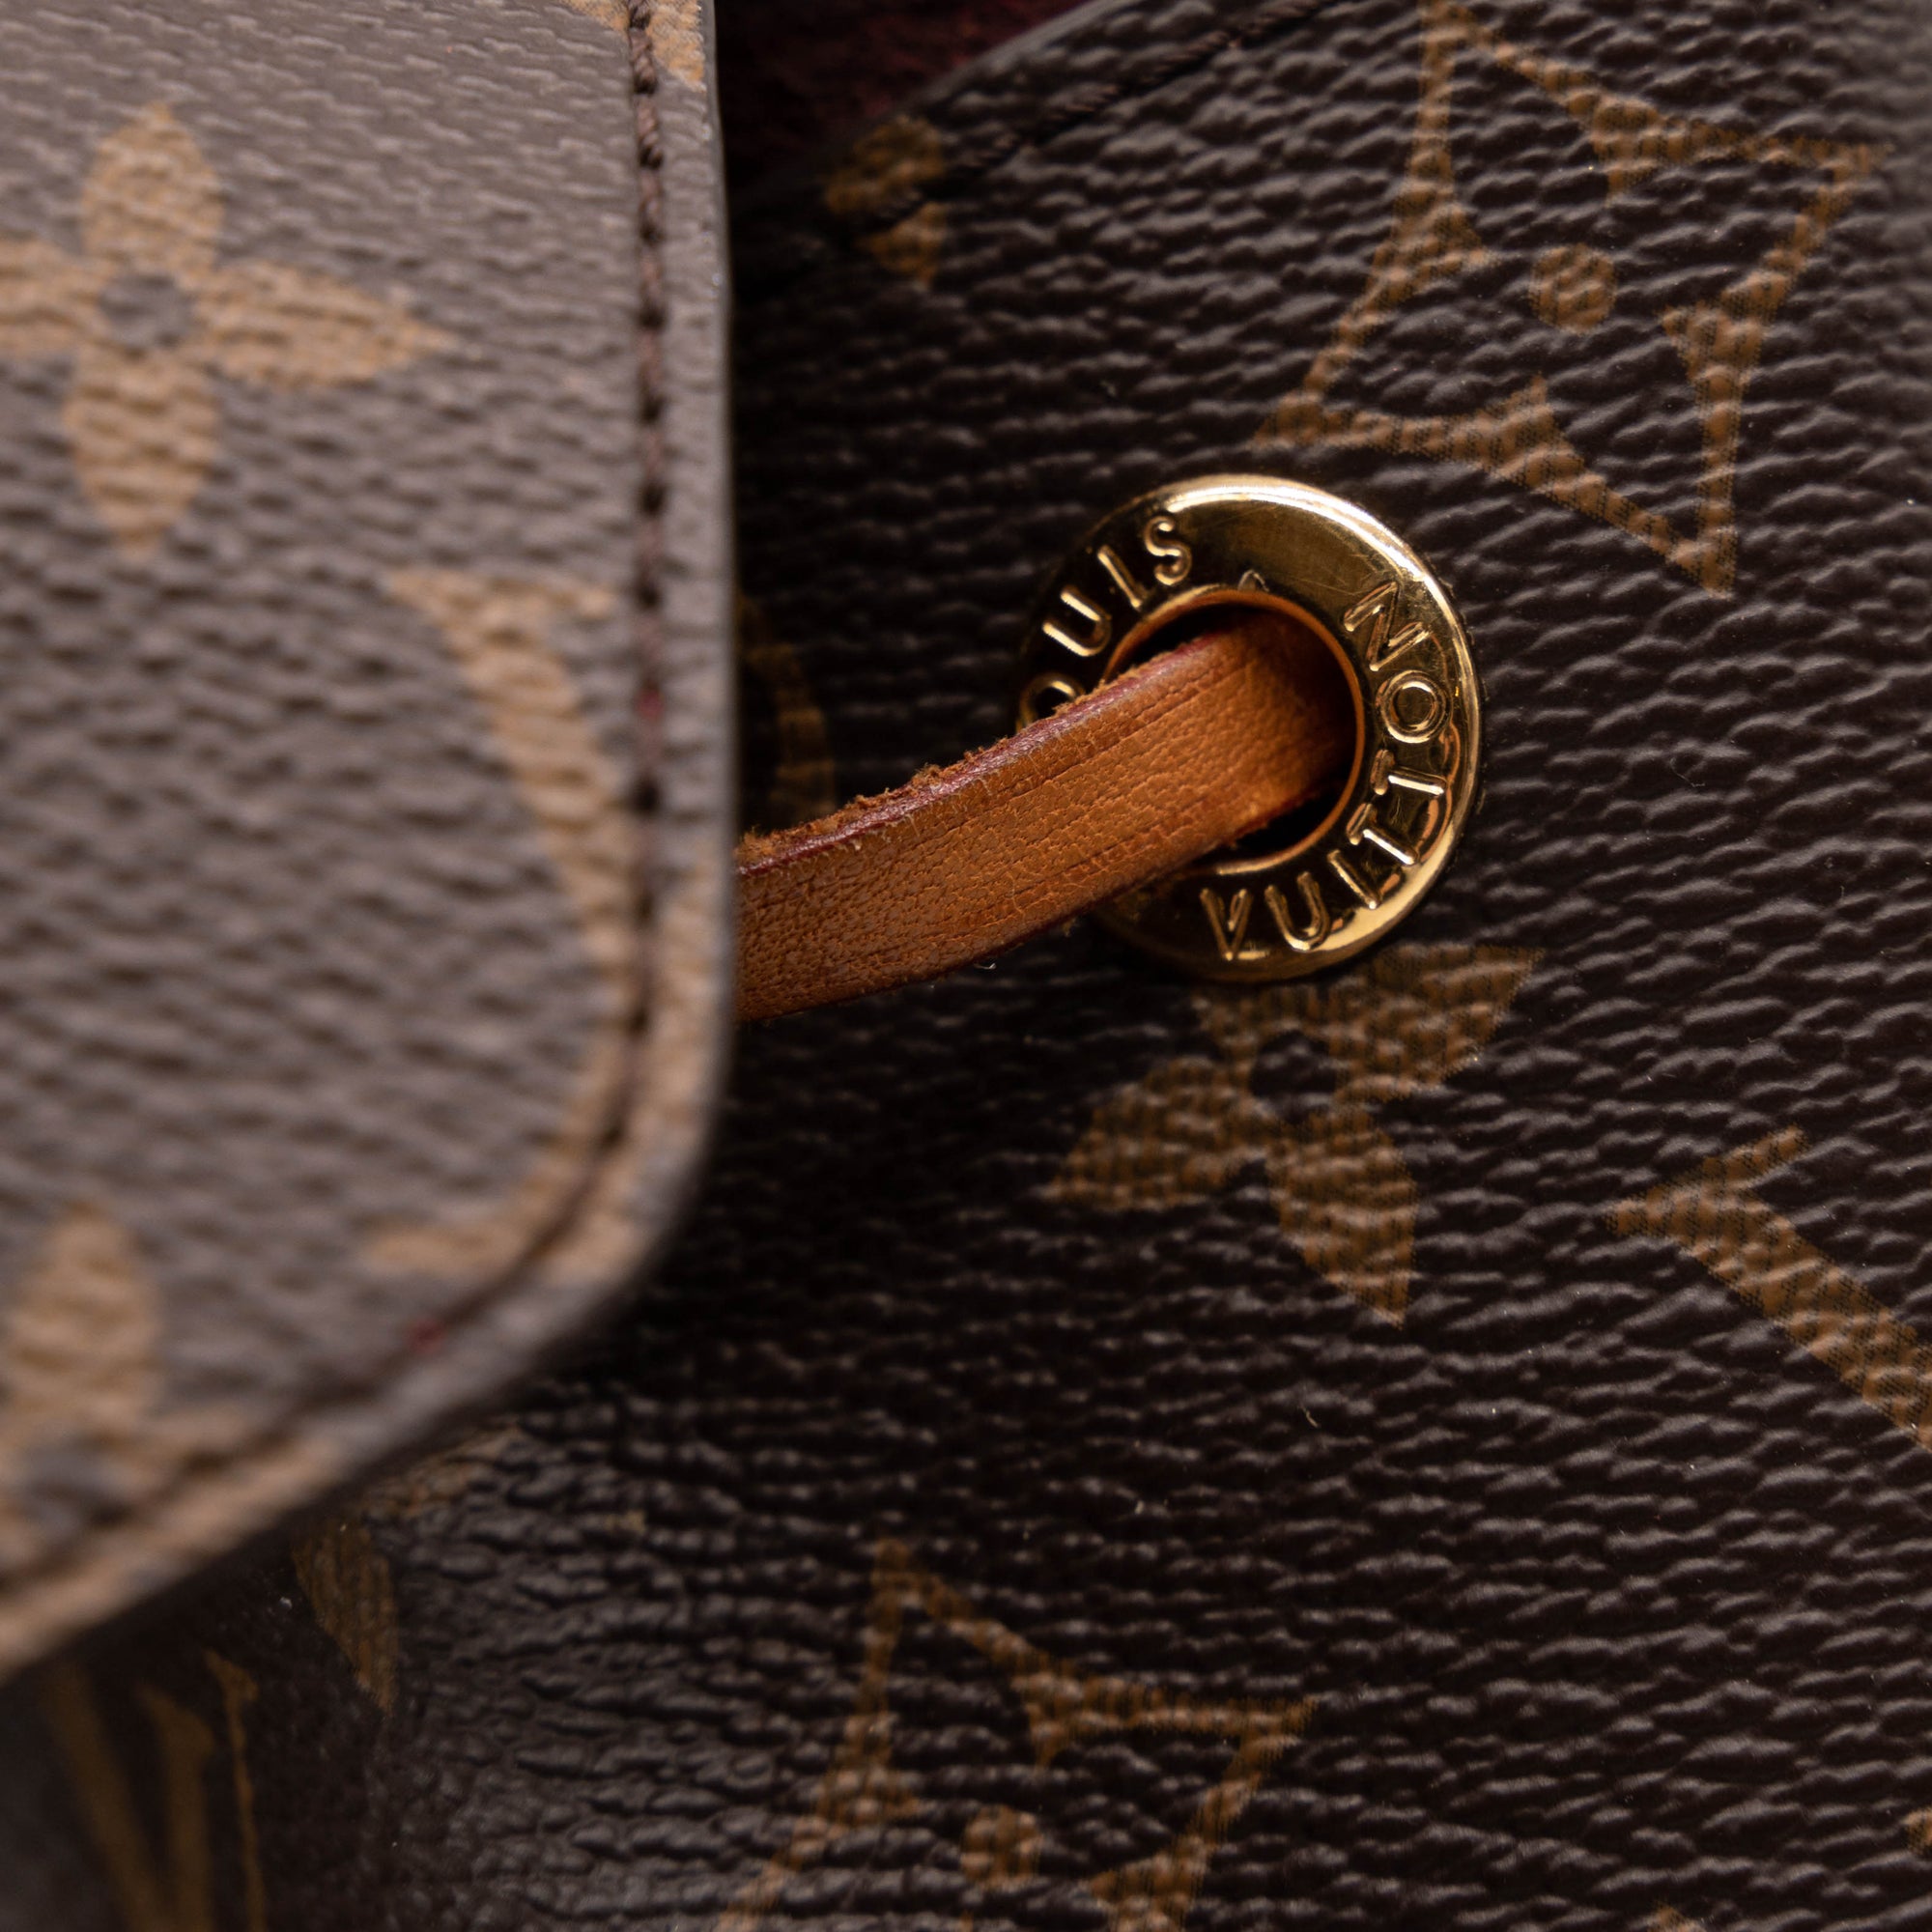 Louis Vuitton Monogram Montsouris Mm Backpack (Authentic Pre-Owned